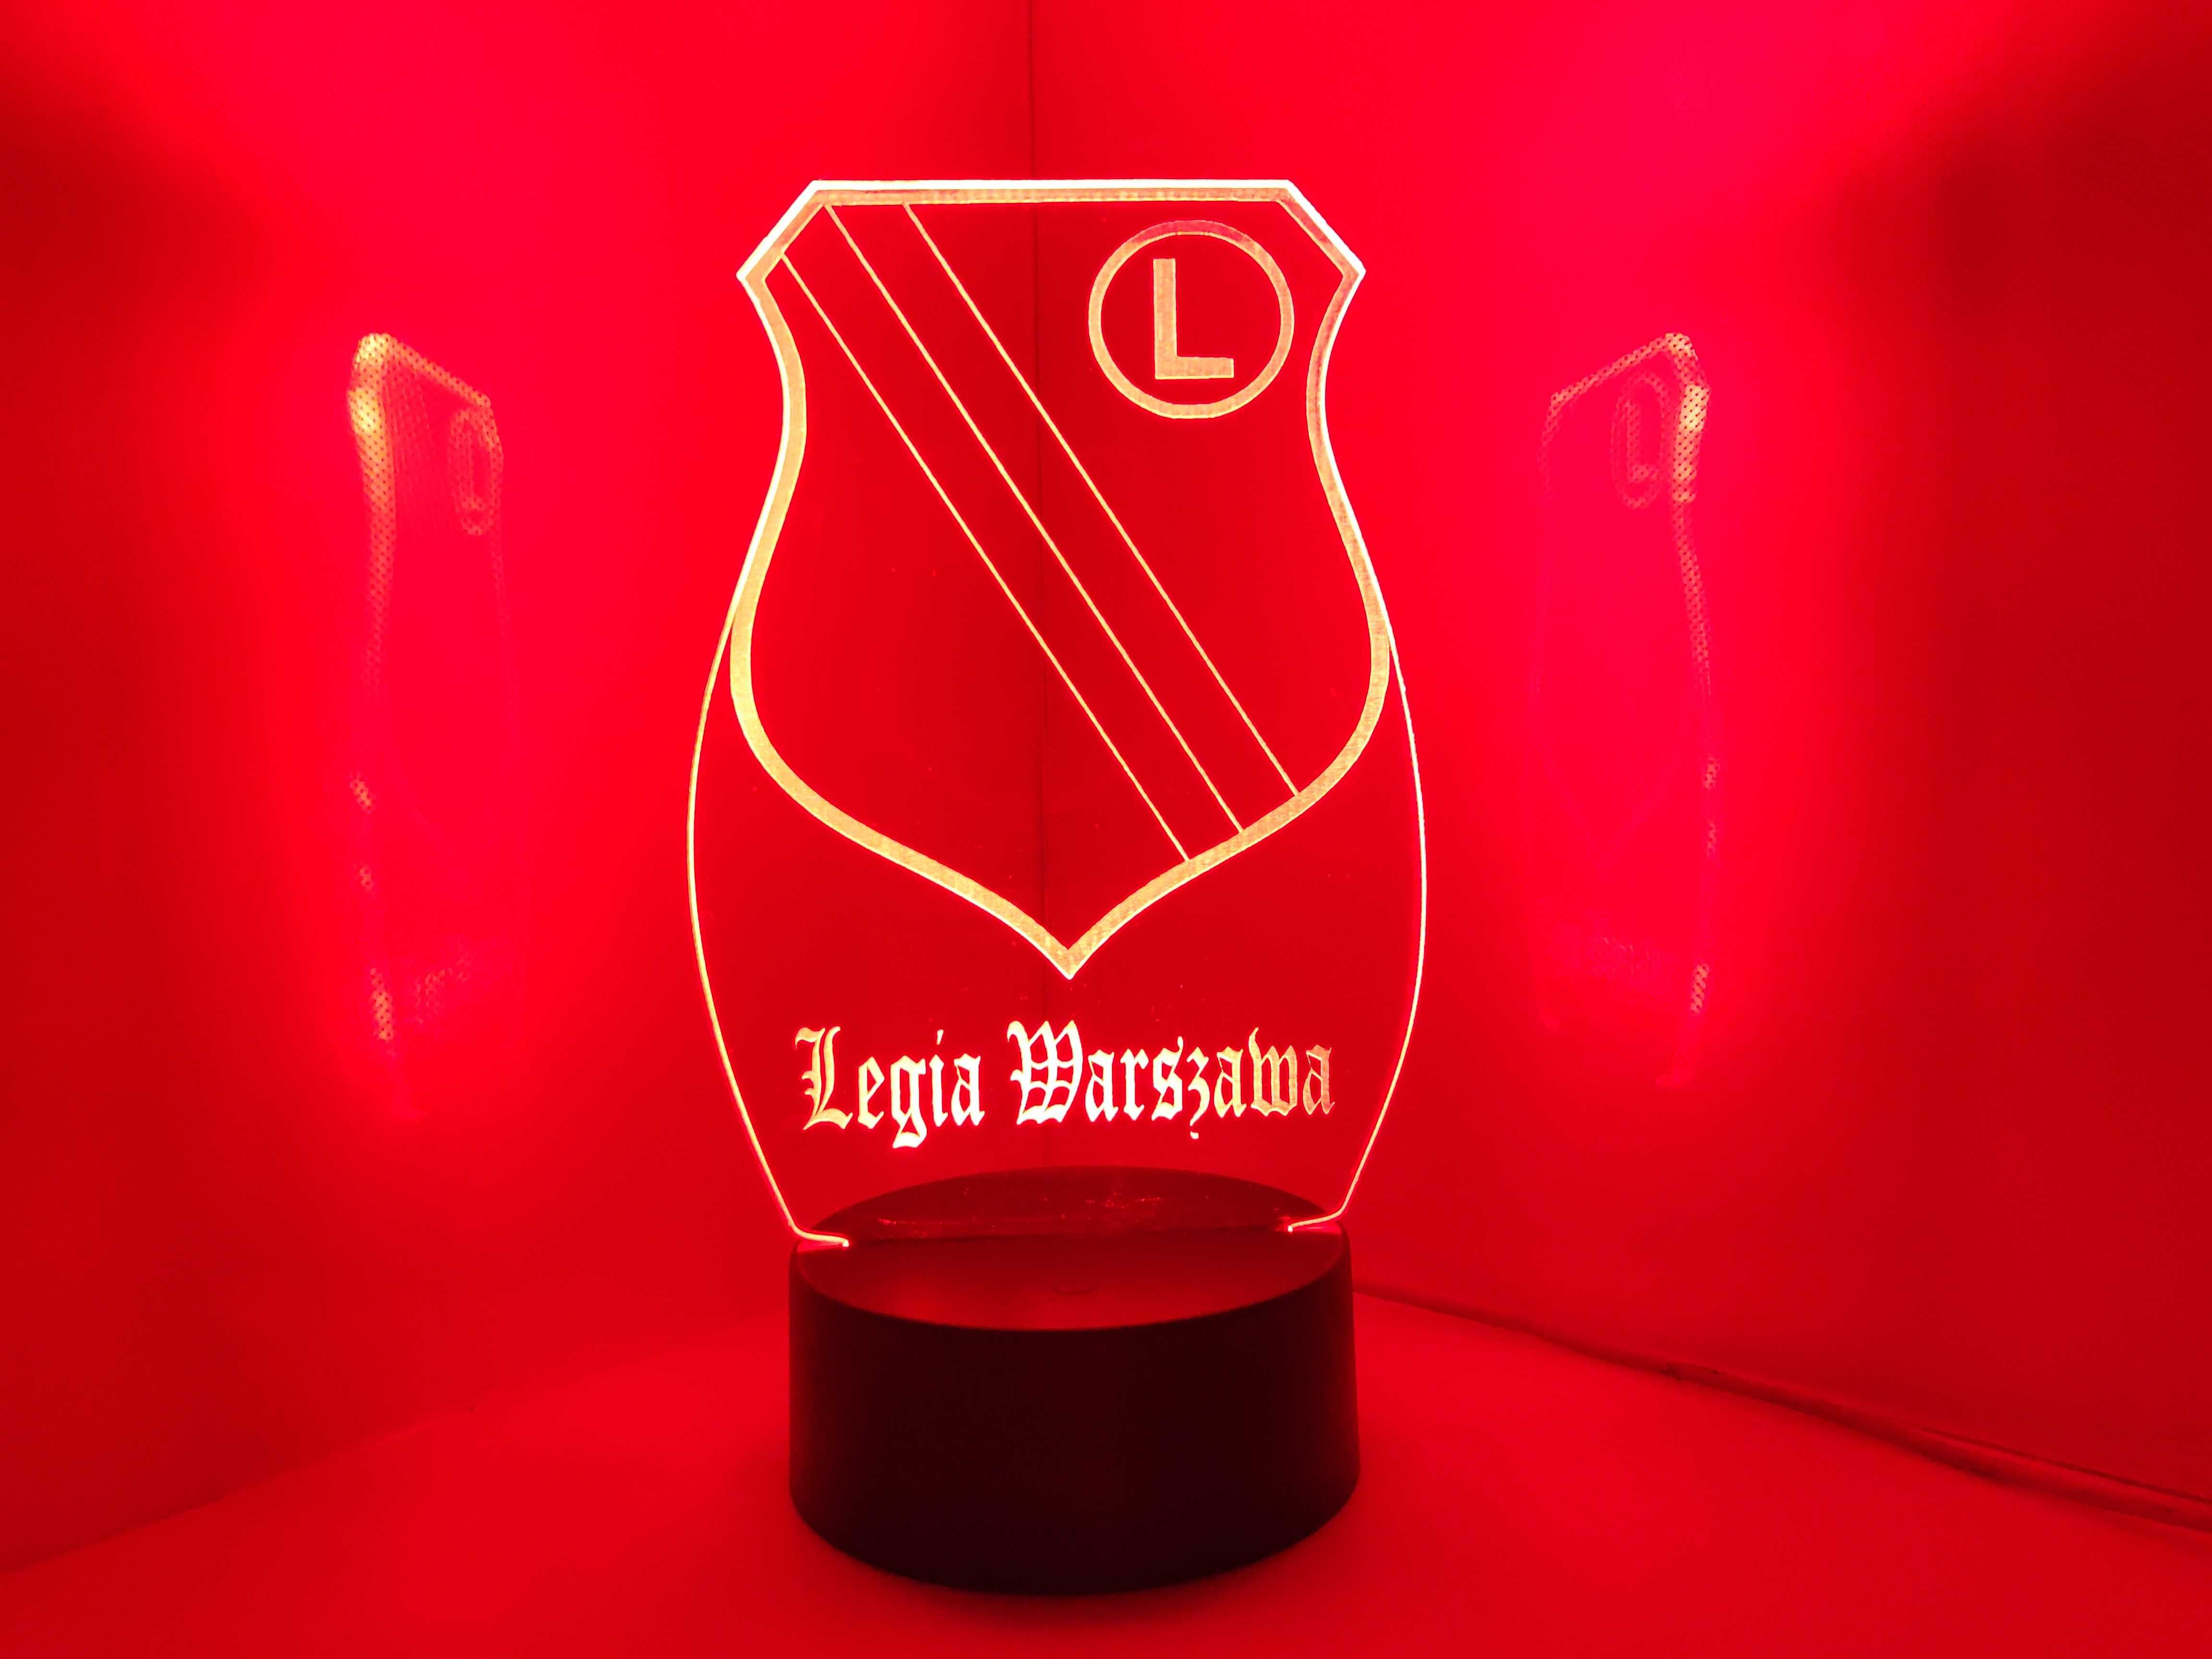 LEGIA WARSZAWA logo herb lampka LED na pilota, PREZENT dla KIBICA!